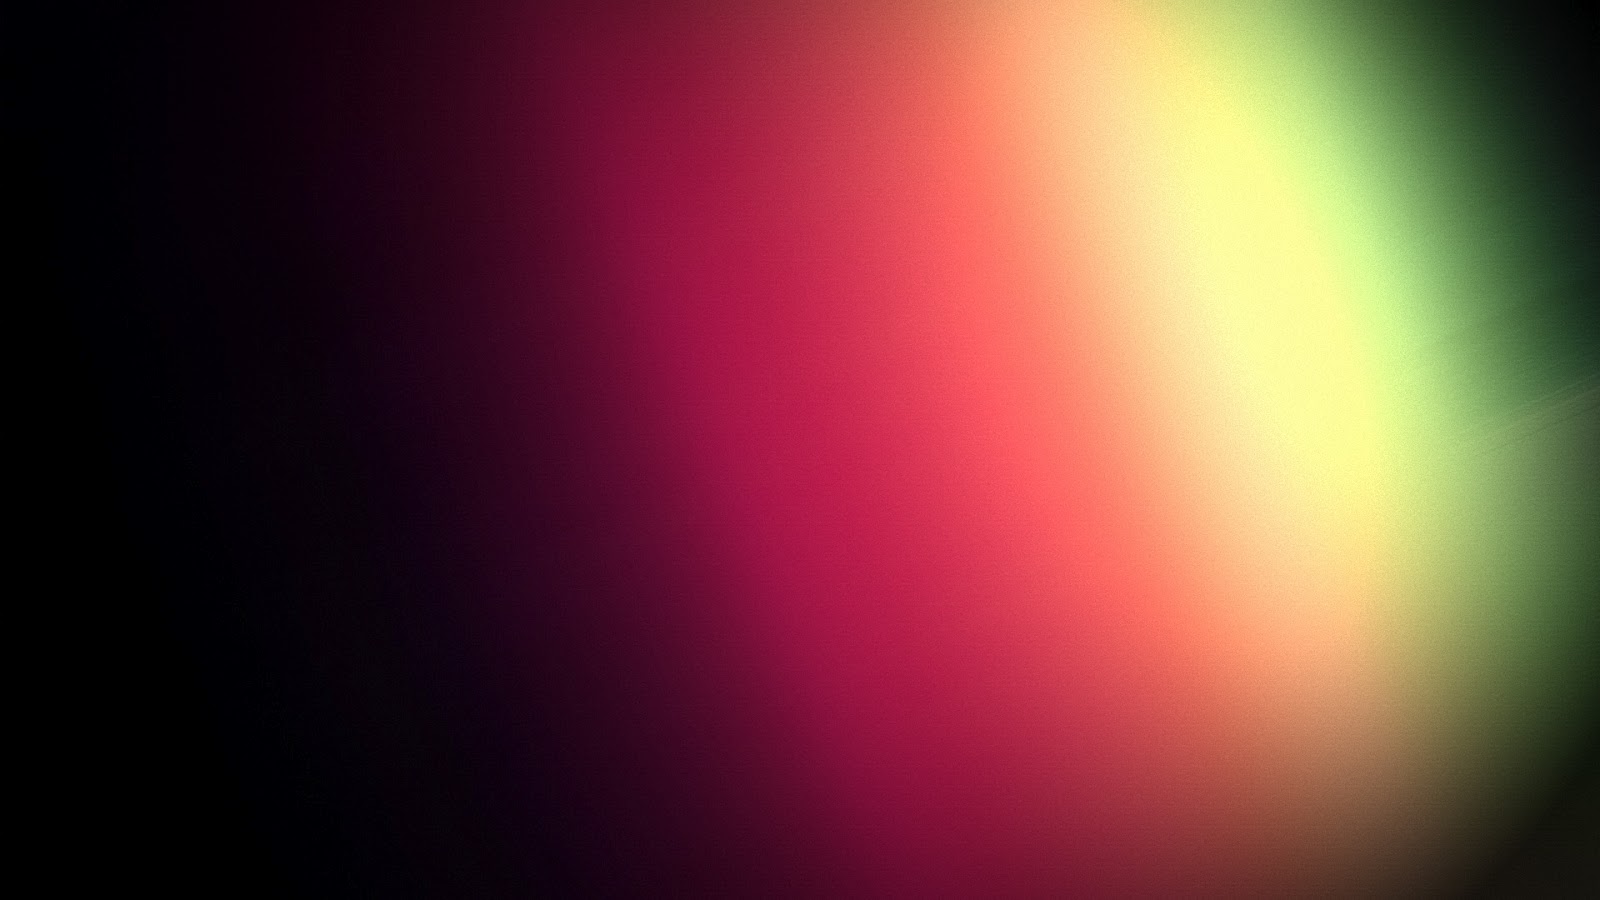 Spectrum Abstract HD Wallpaper 1080p   HD Dock